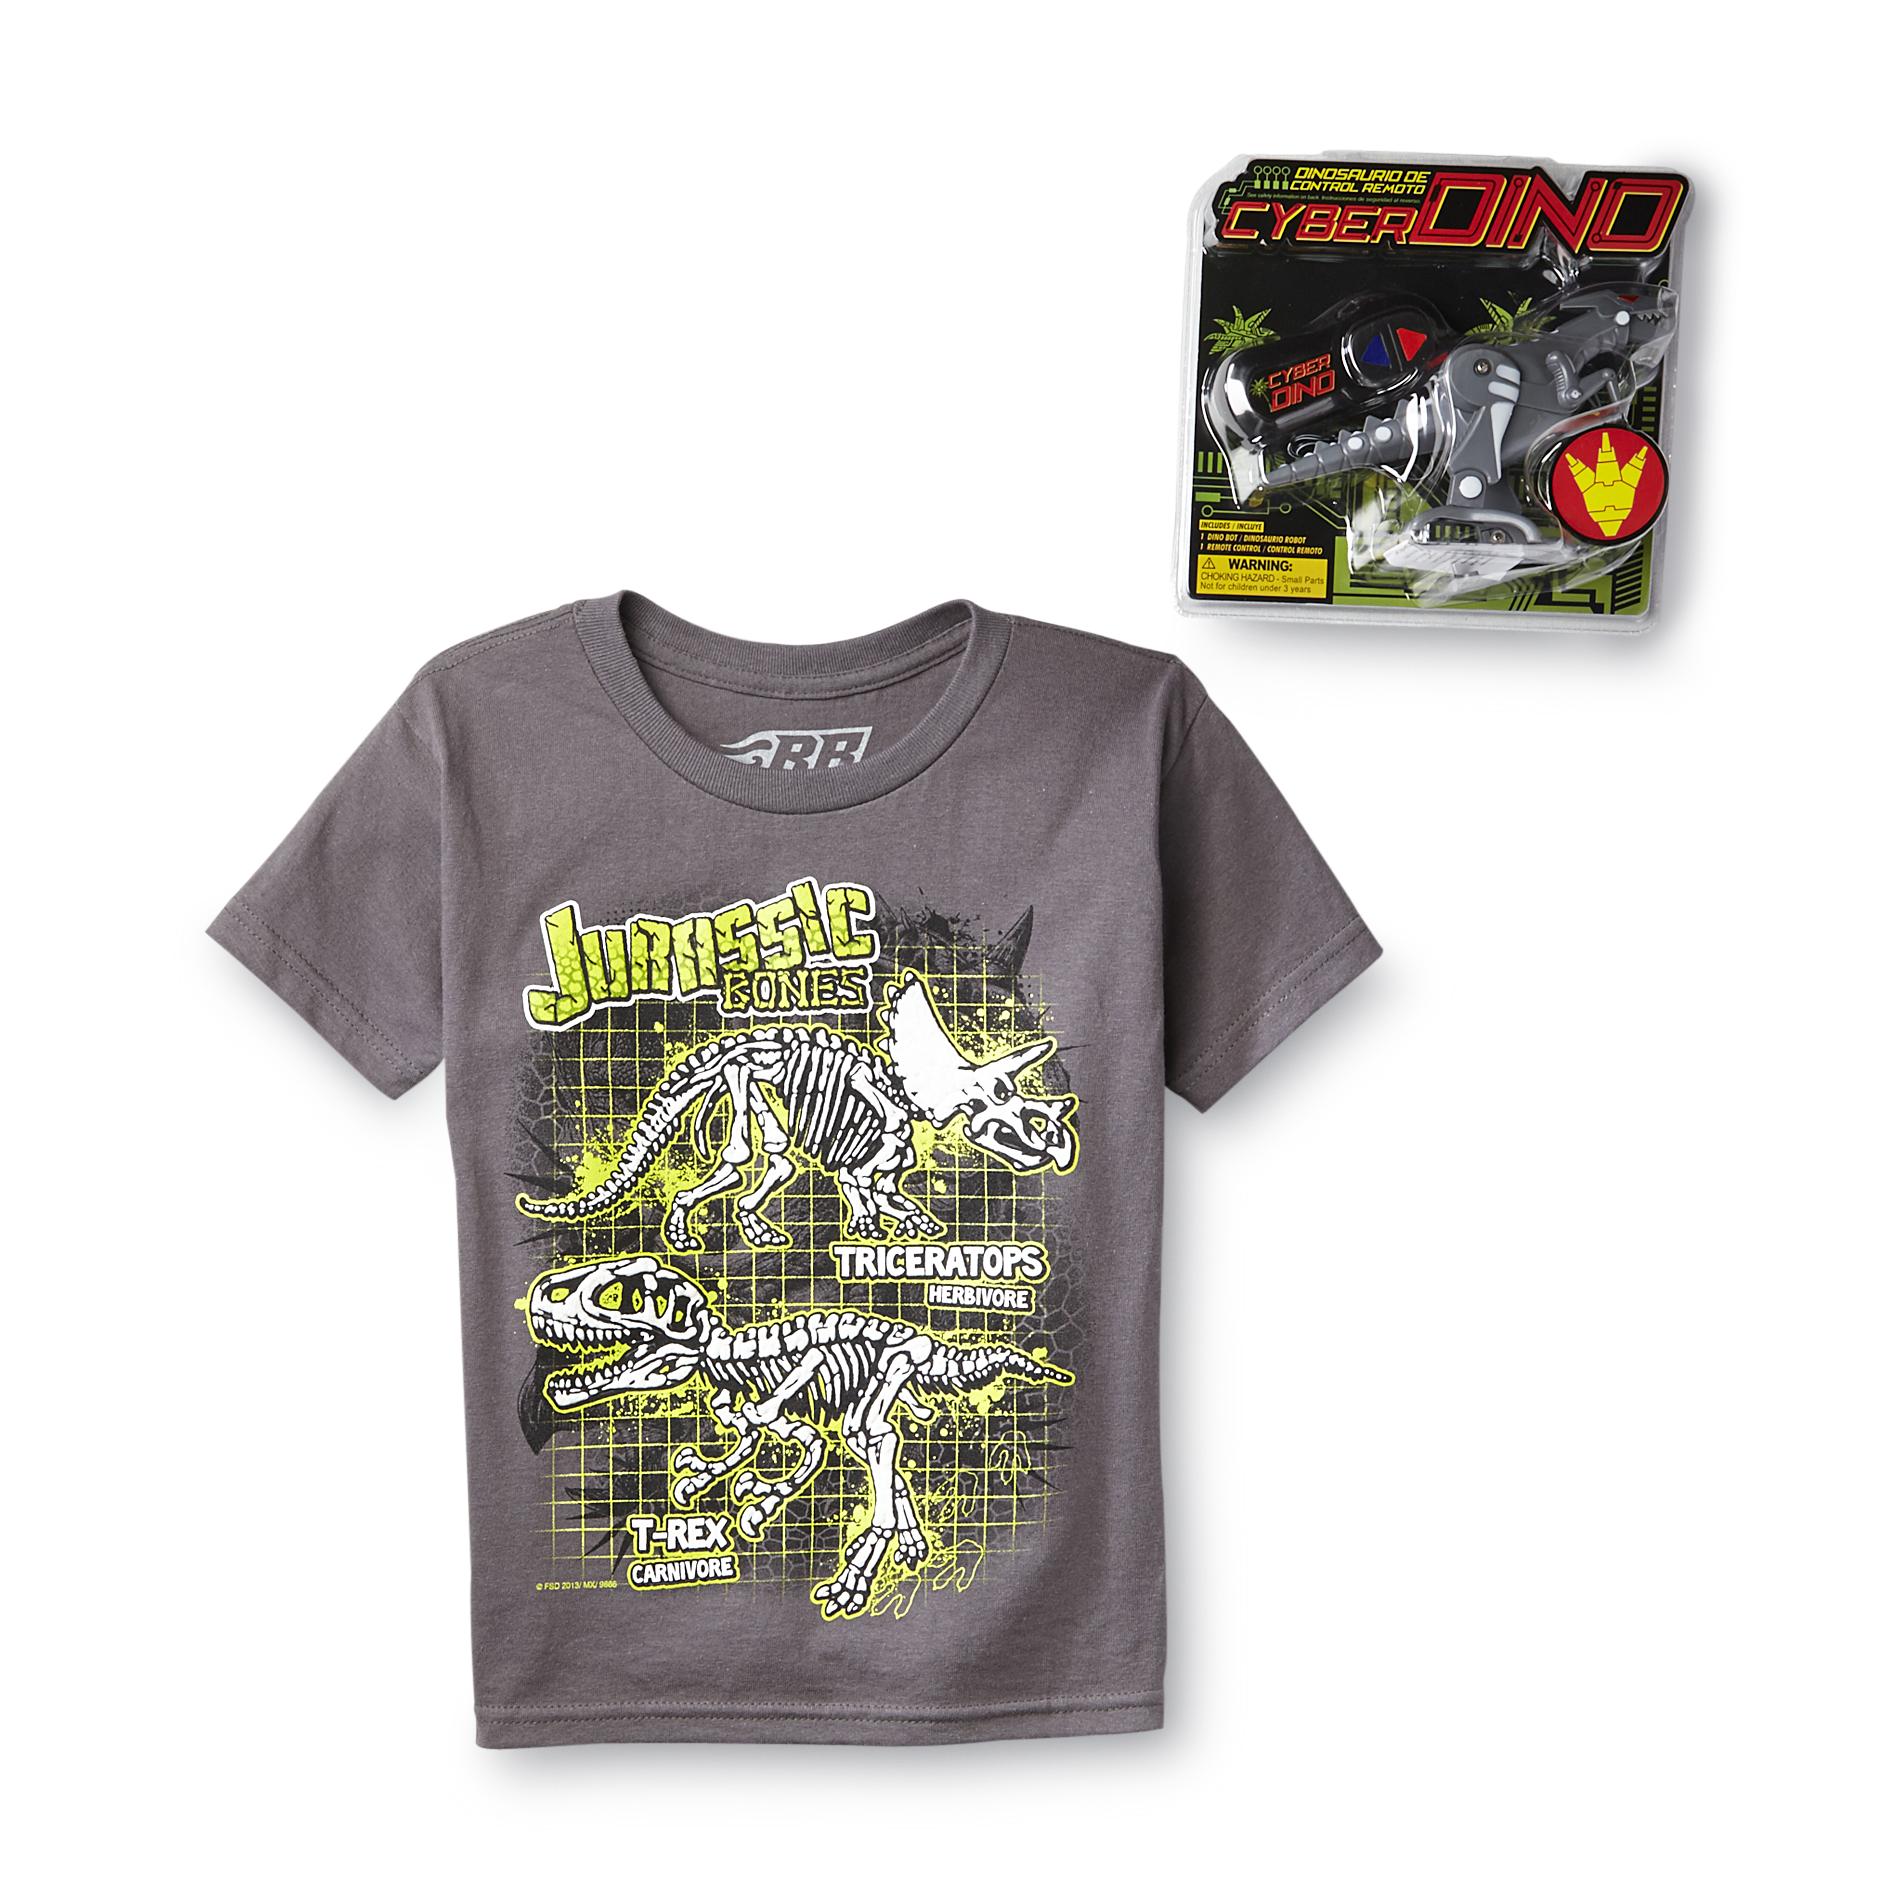 Rudeboyz Boy's Graphic T-Shirt & Remote Control Dinosaur Toy